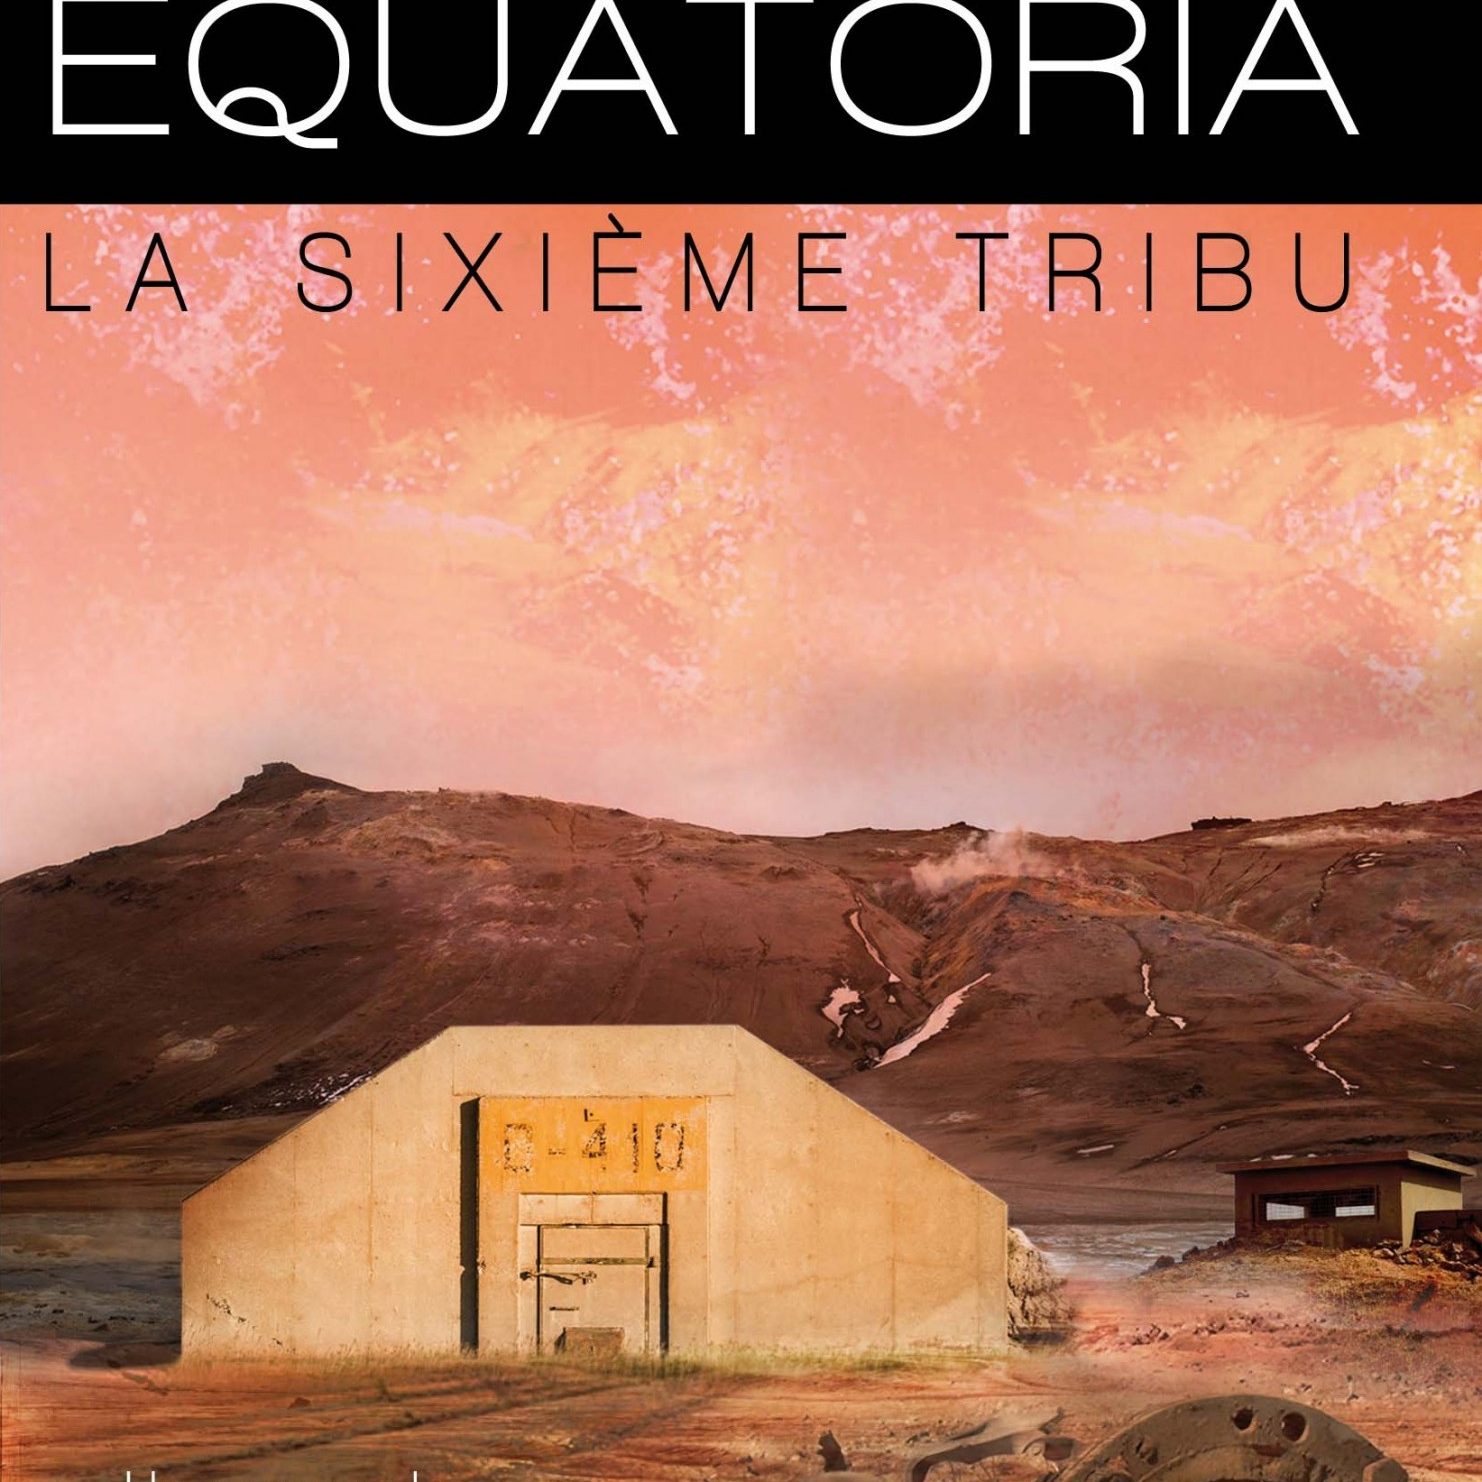 Équatoria, la sixième tribu T2